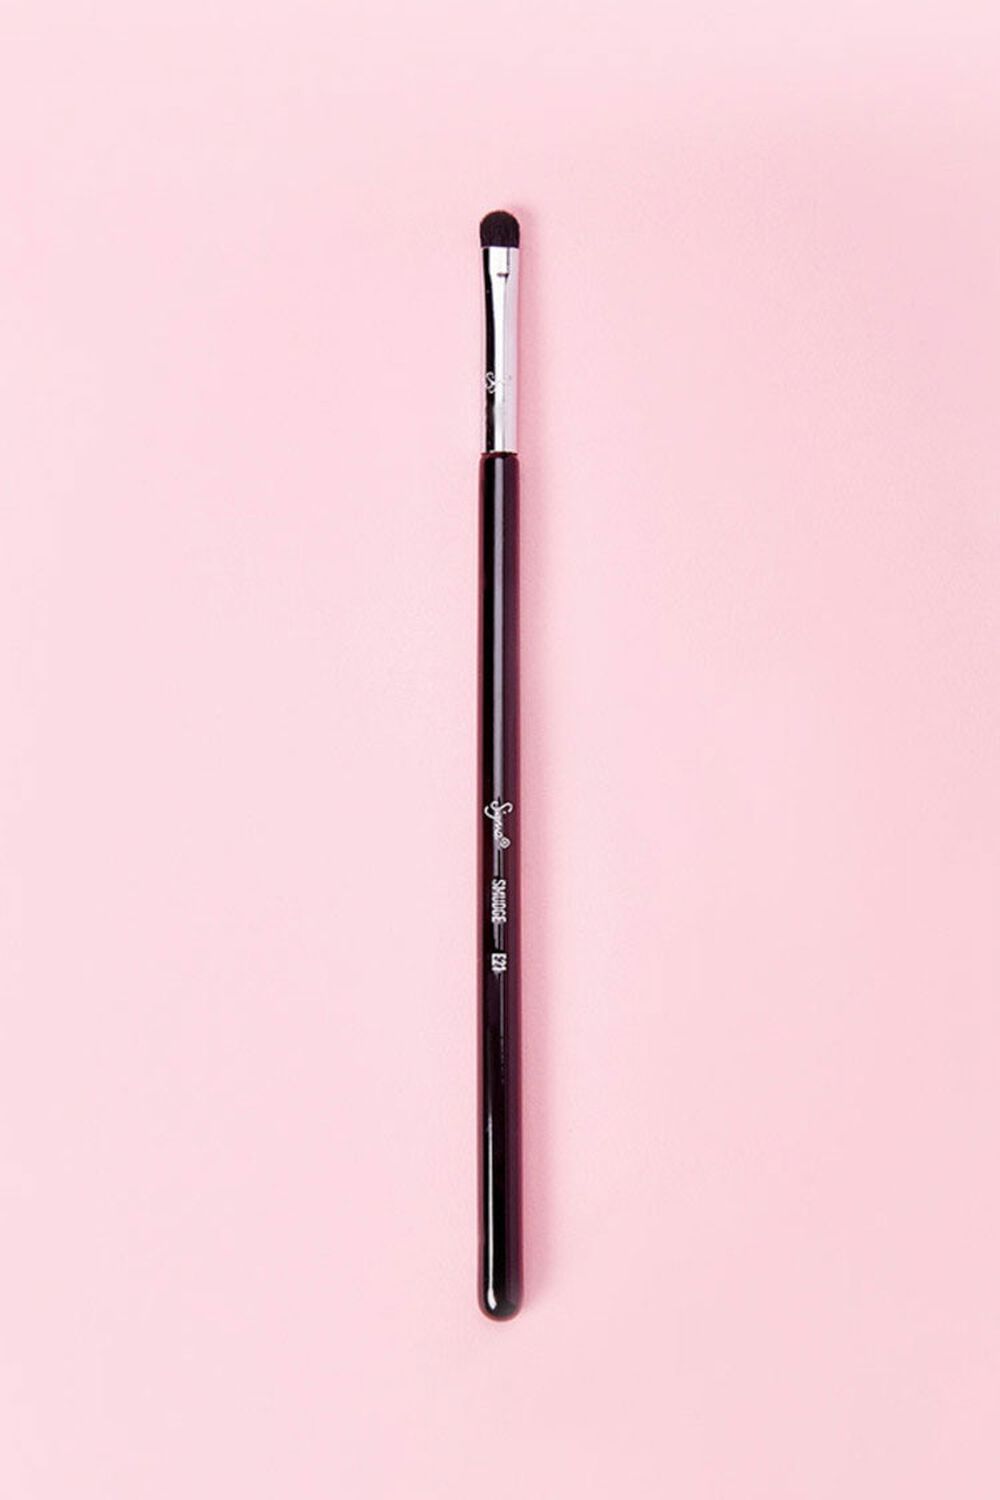 BLACK Sigma Beauty E21 – Smudge Brush, image 1